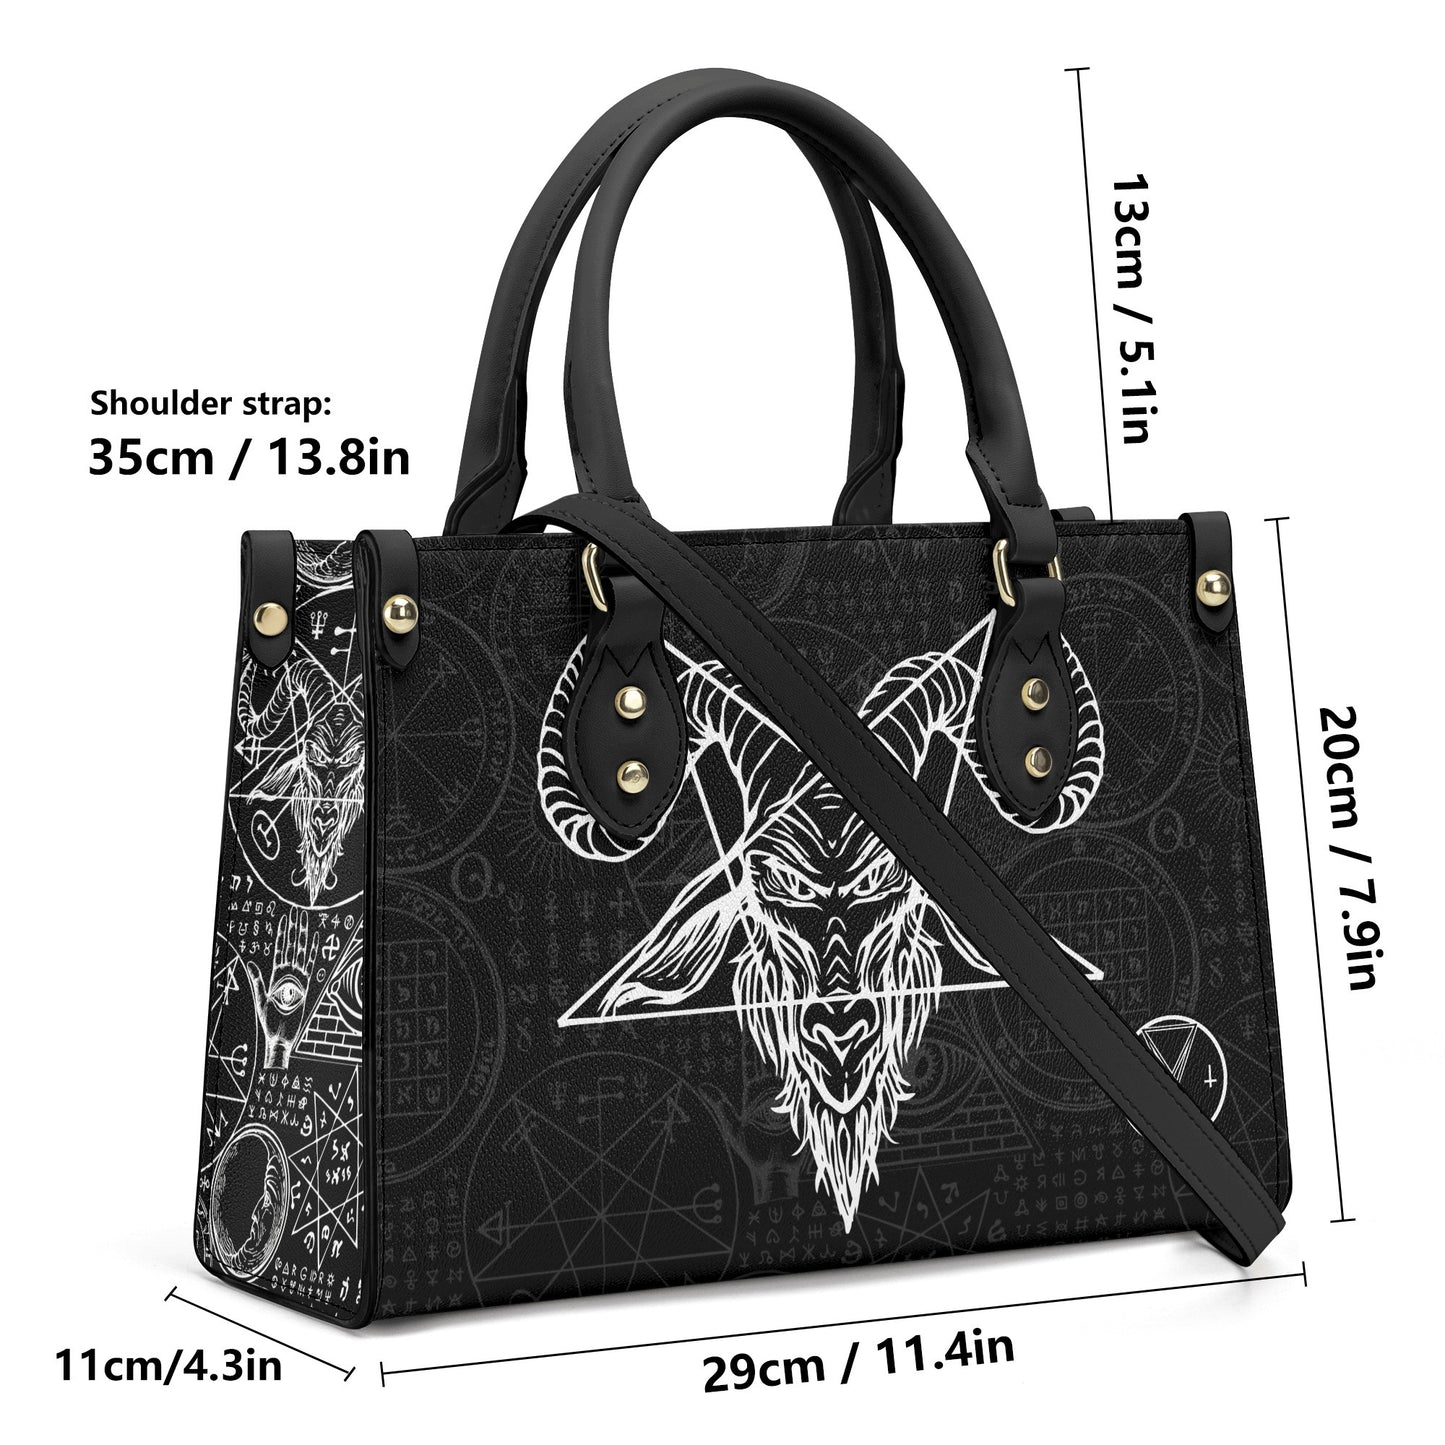 Luciferian Leather Bag